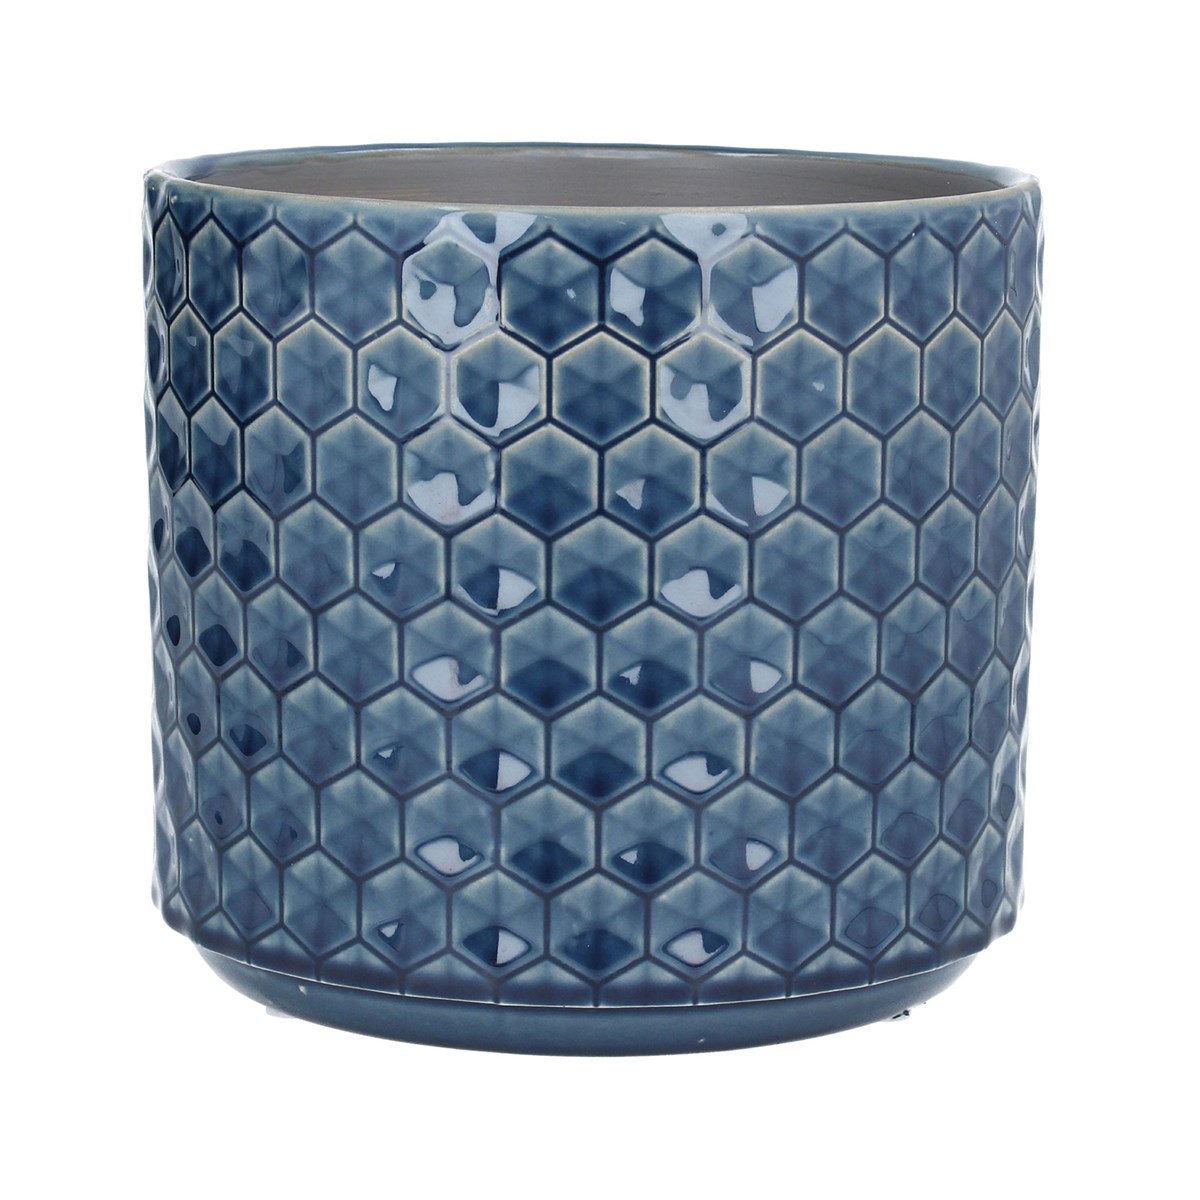 Gisela Graham Navy Honeycomb Ceramic Pot Cover, Large